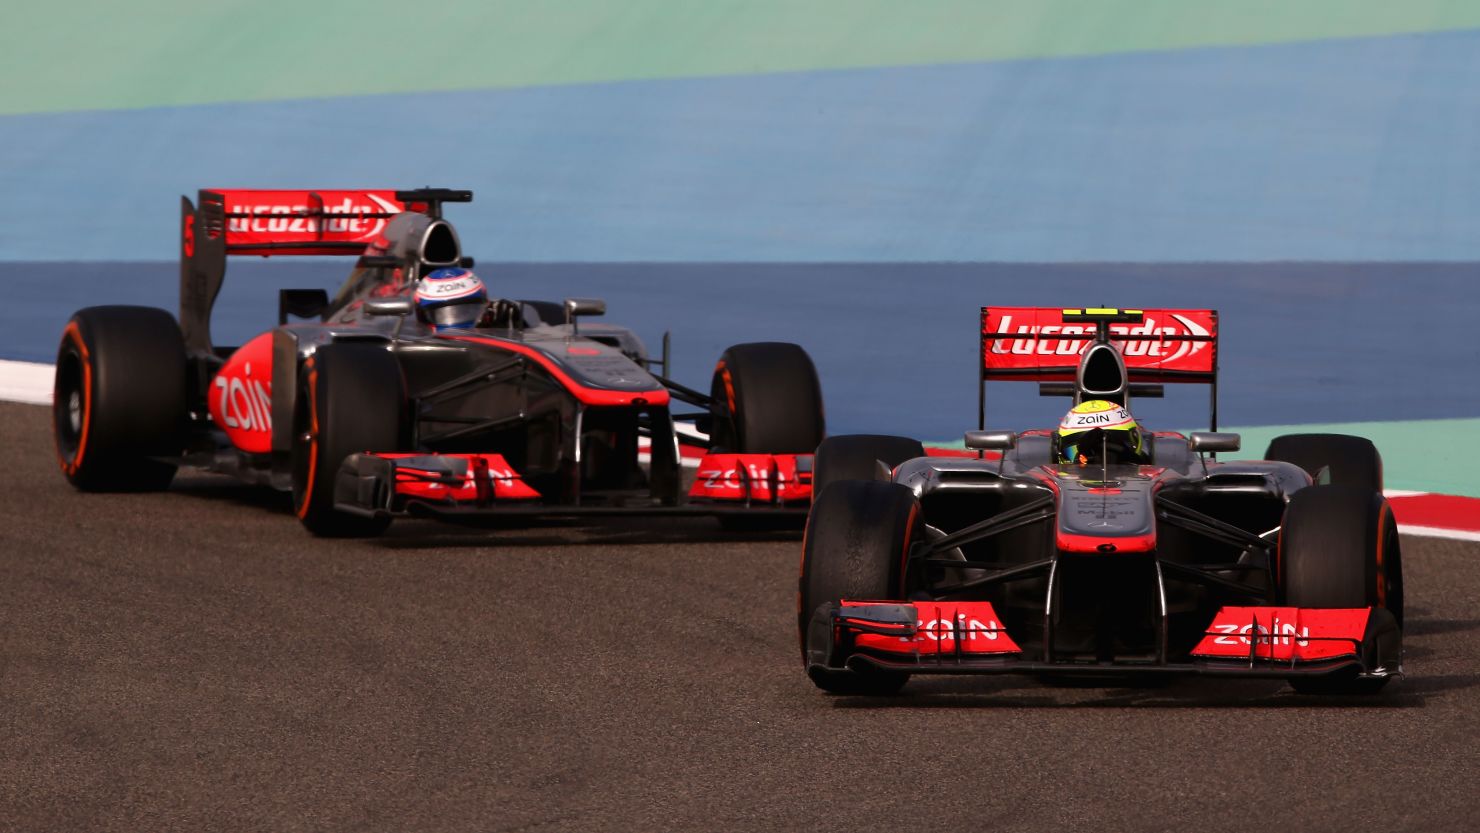 McLaren's Sergio Perez leads teammate Jenson Button during the Bahrain Grand Prix at Sakhir on Sunday.